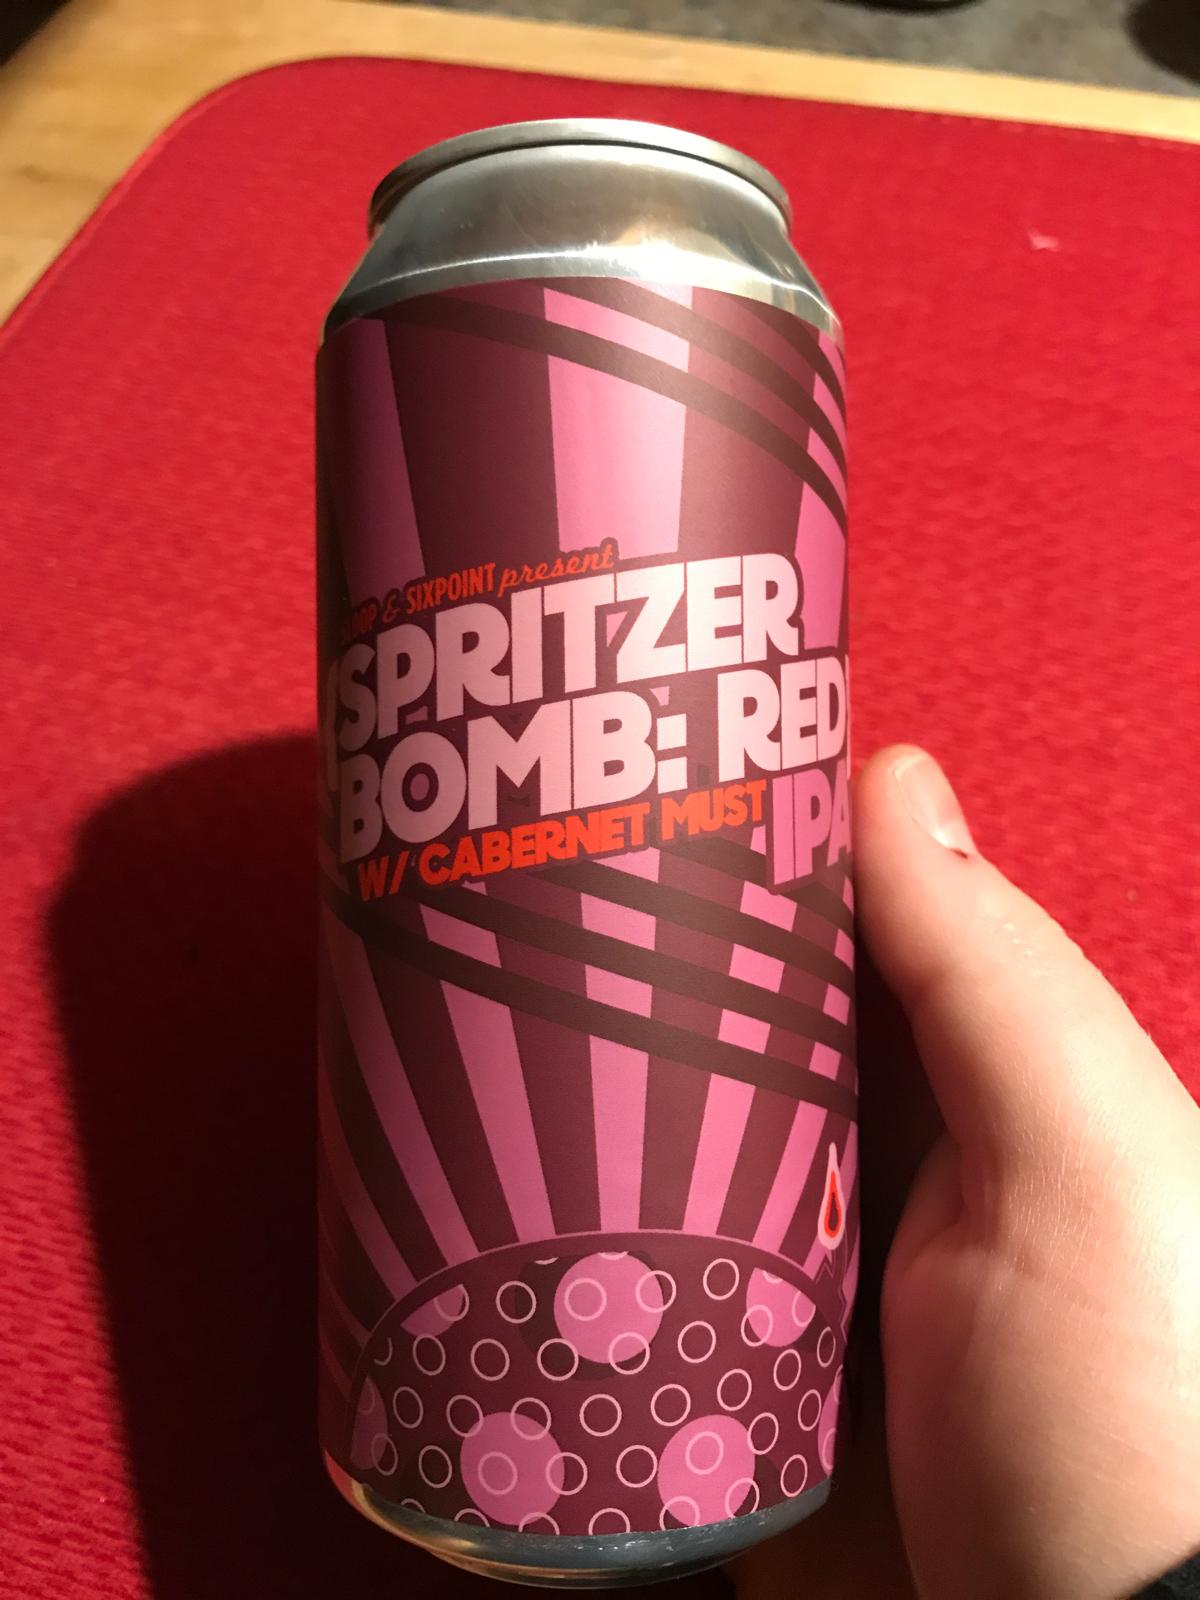 Spritzer Bomb: Red IPA